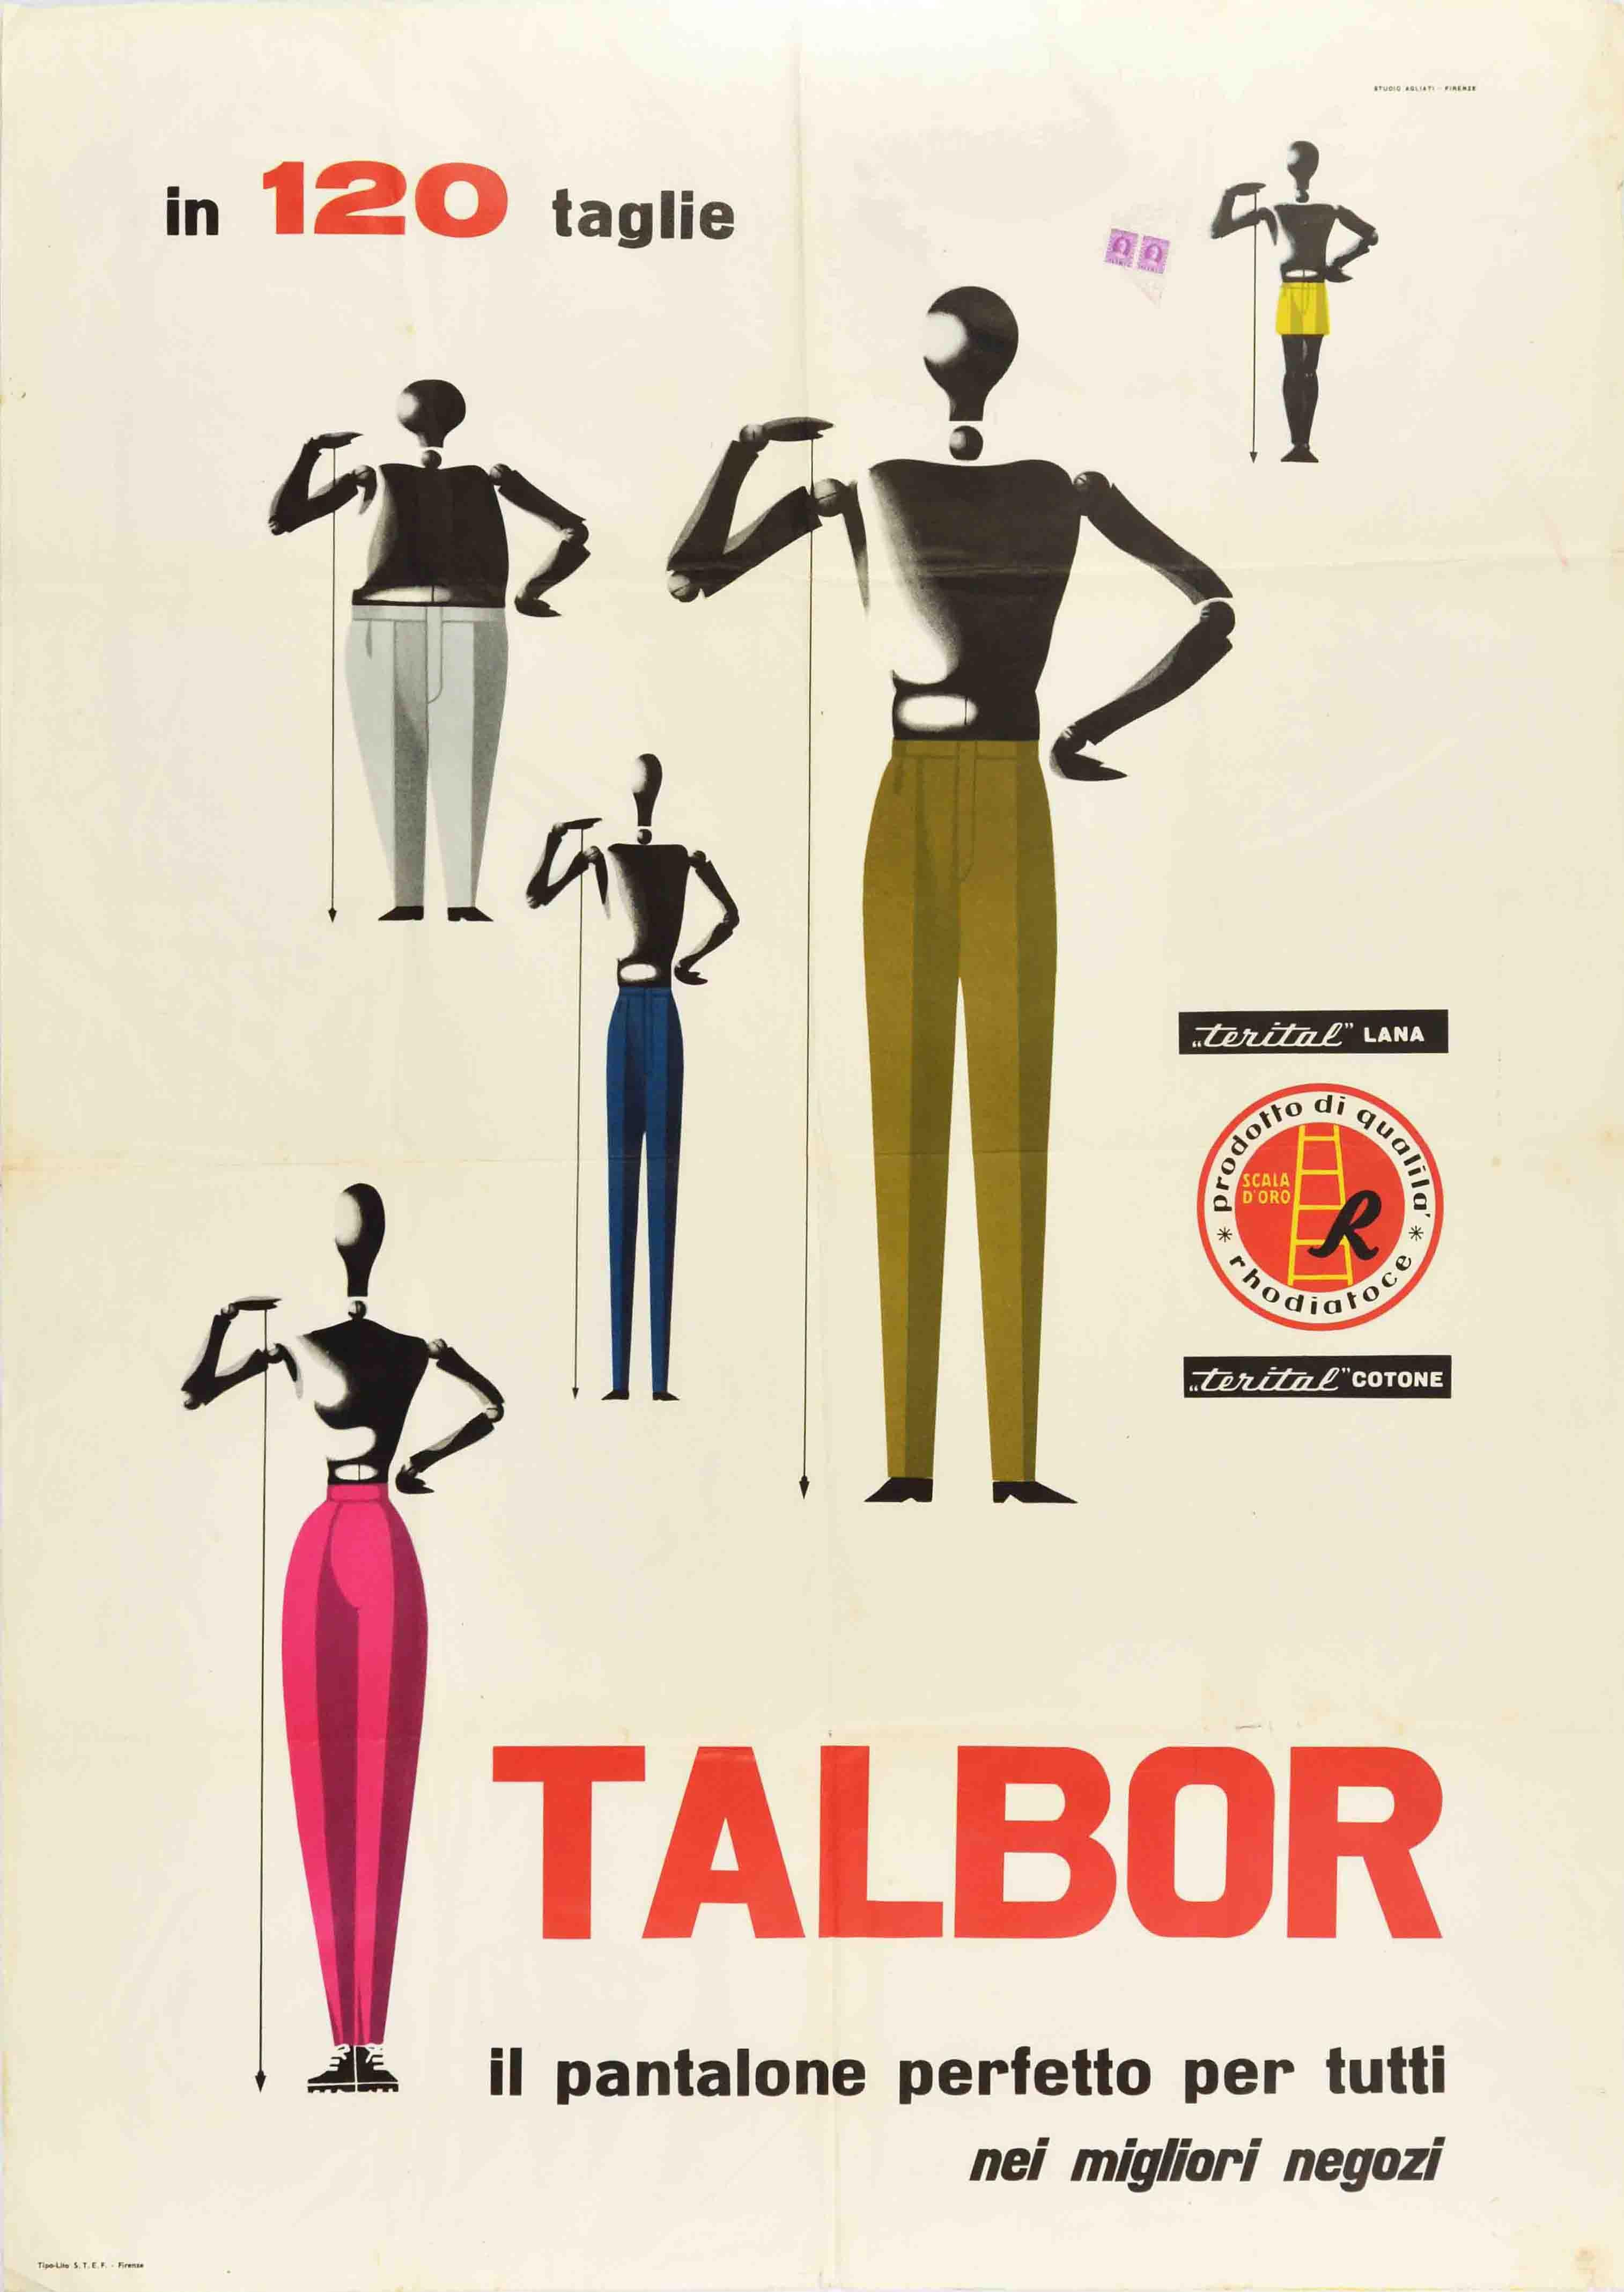 Studio Agliati Print - Original Vintage Poster Talbor Pantalone Trousers Italy Fashion Style Design Art